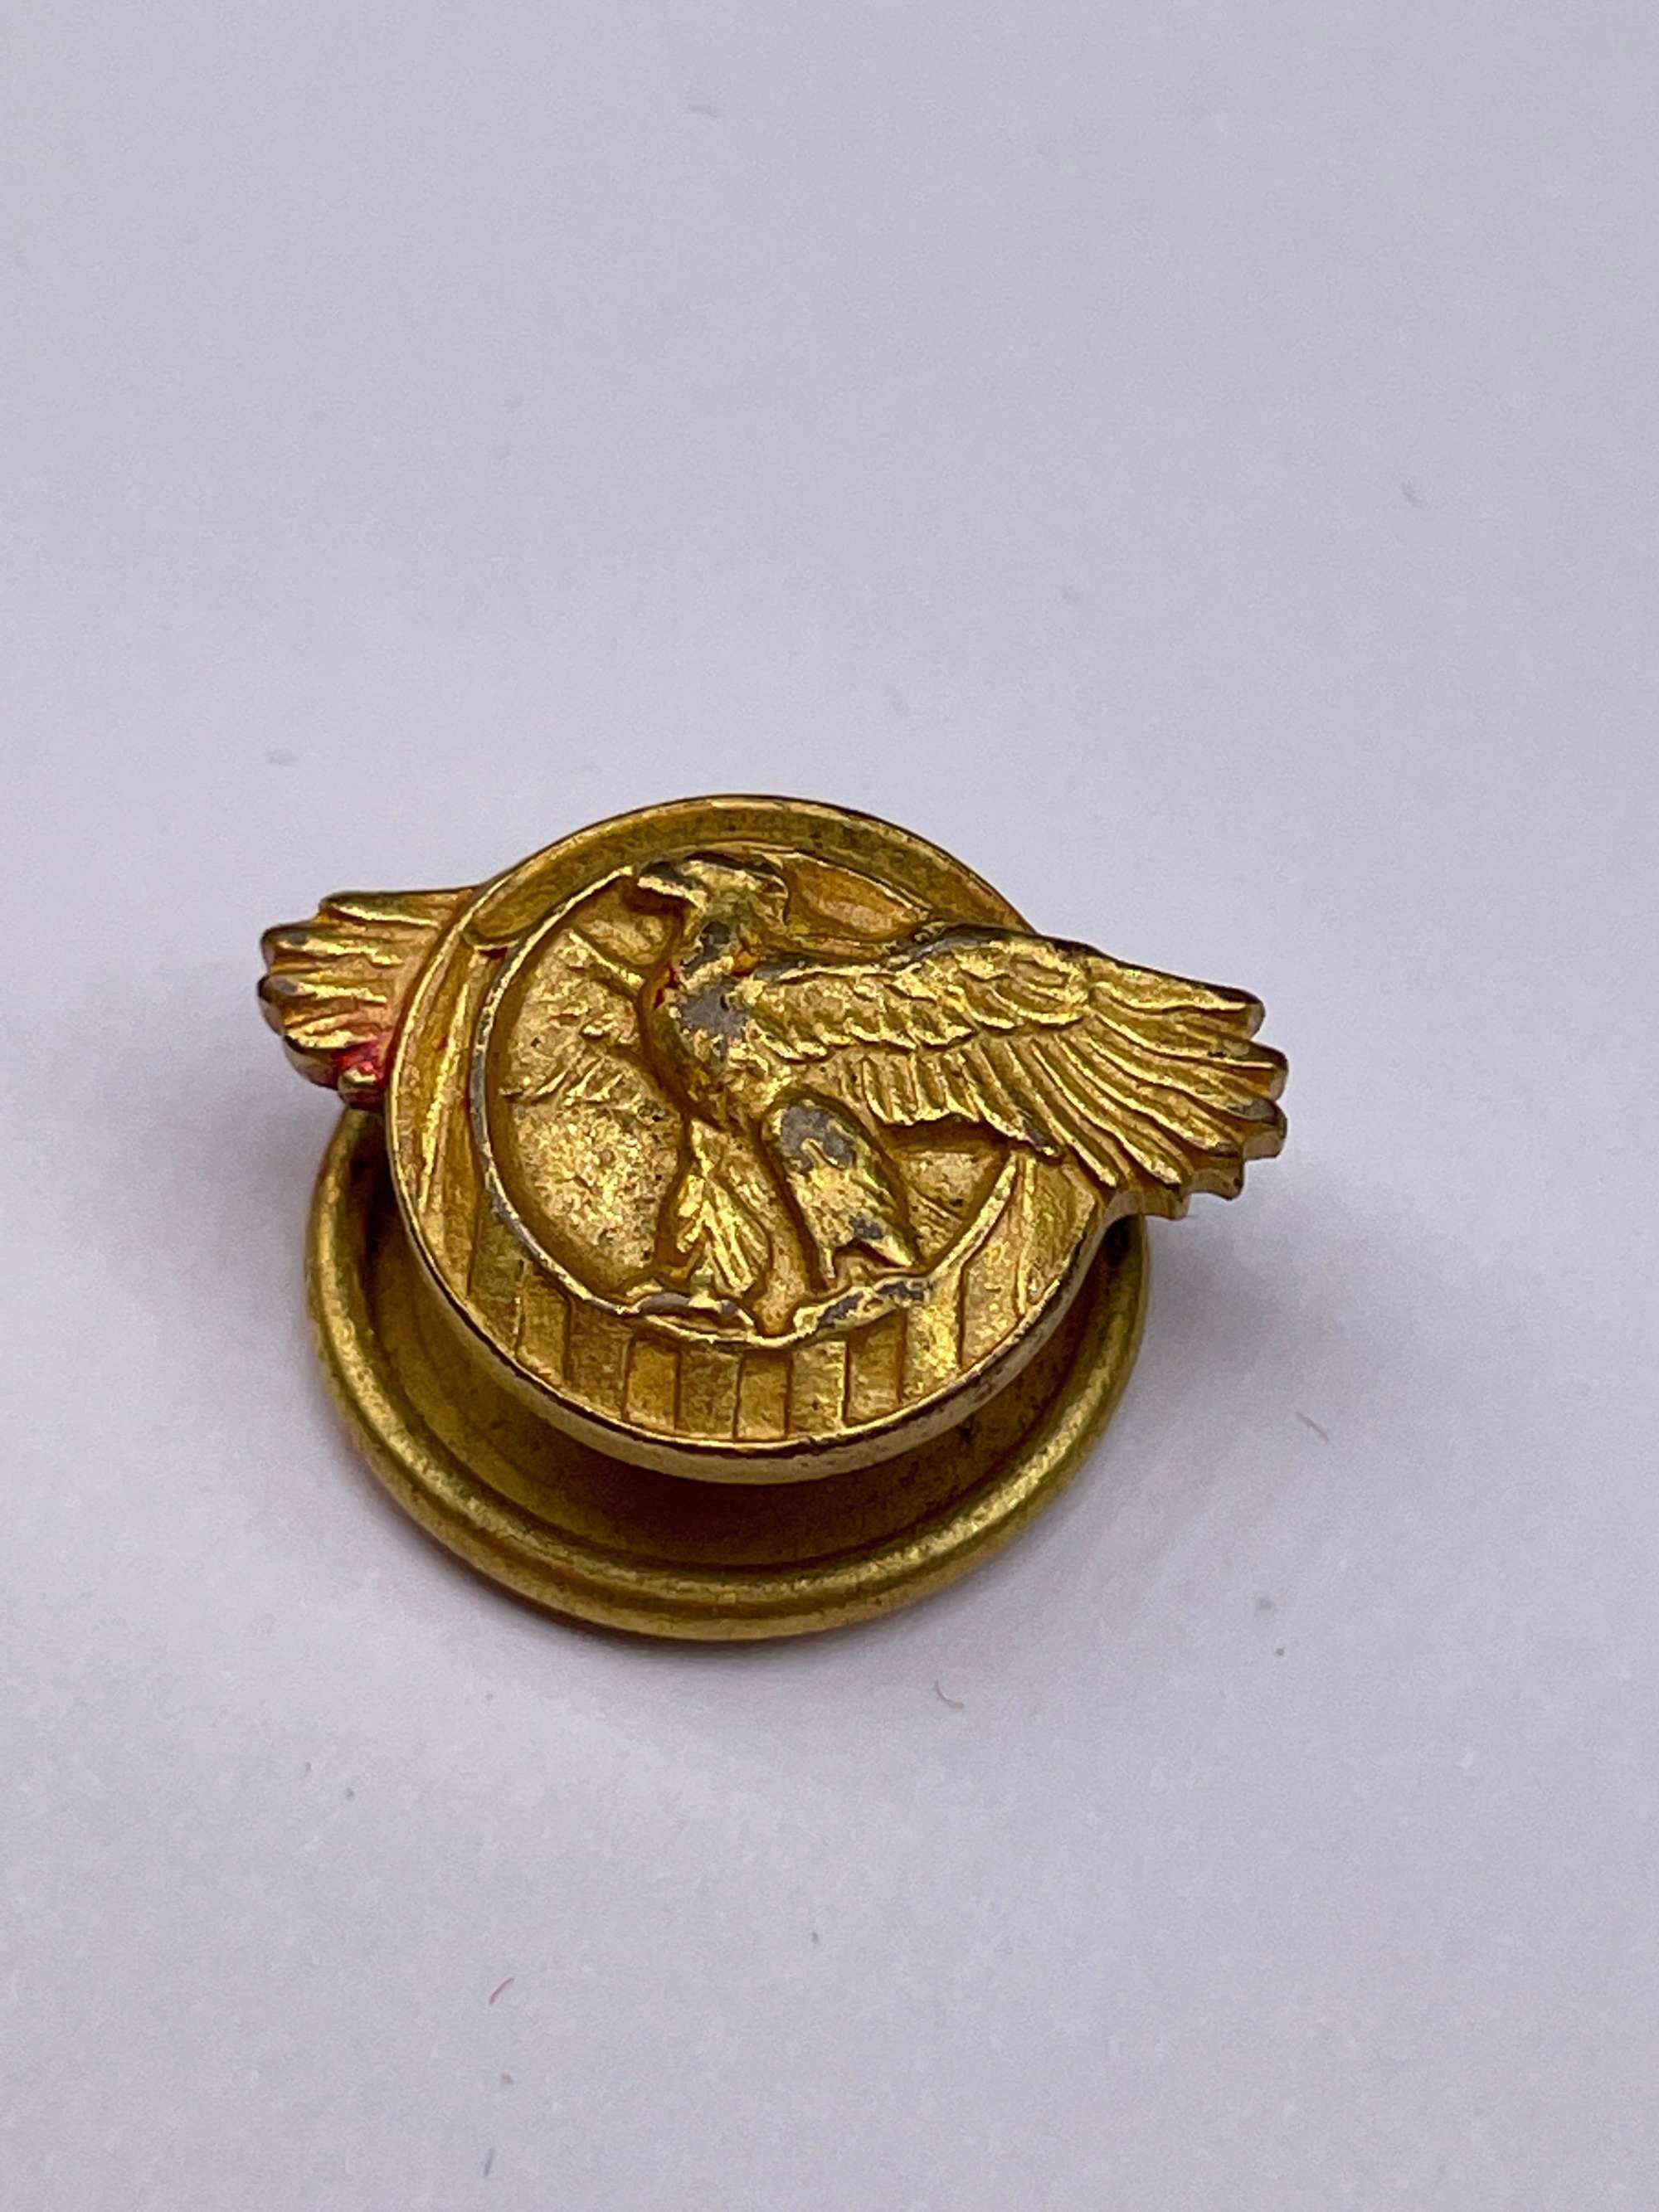 Original World War Two Era American Insignia, Ruptured Duck Pin